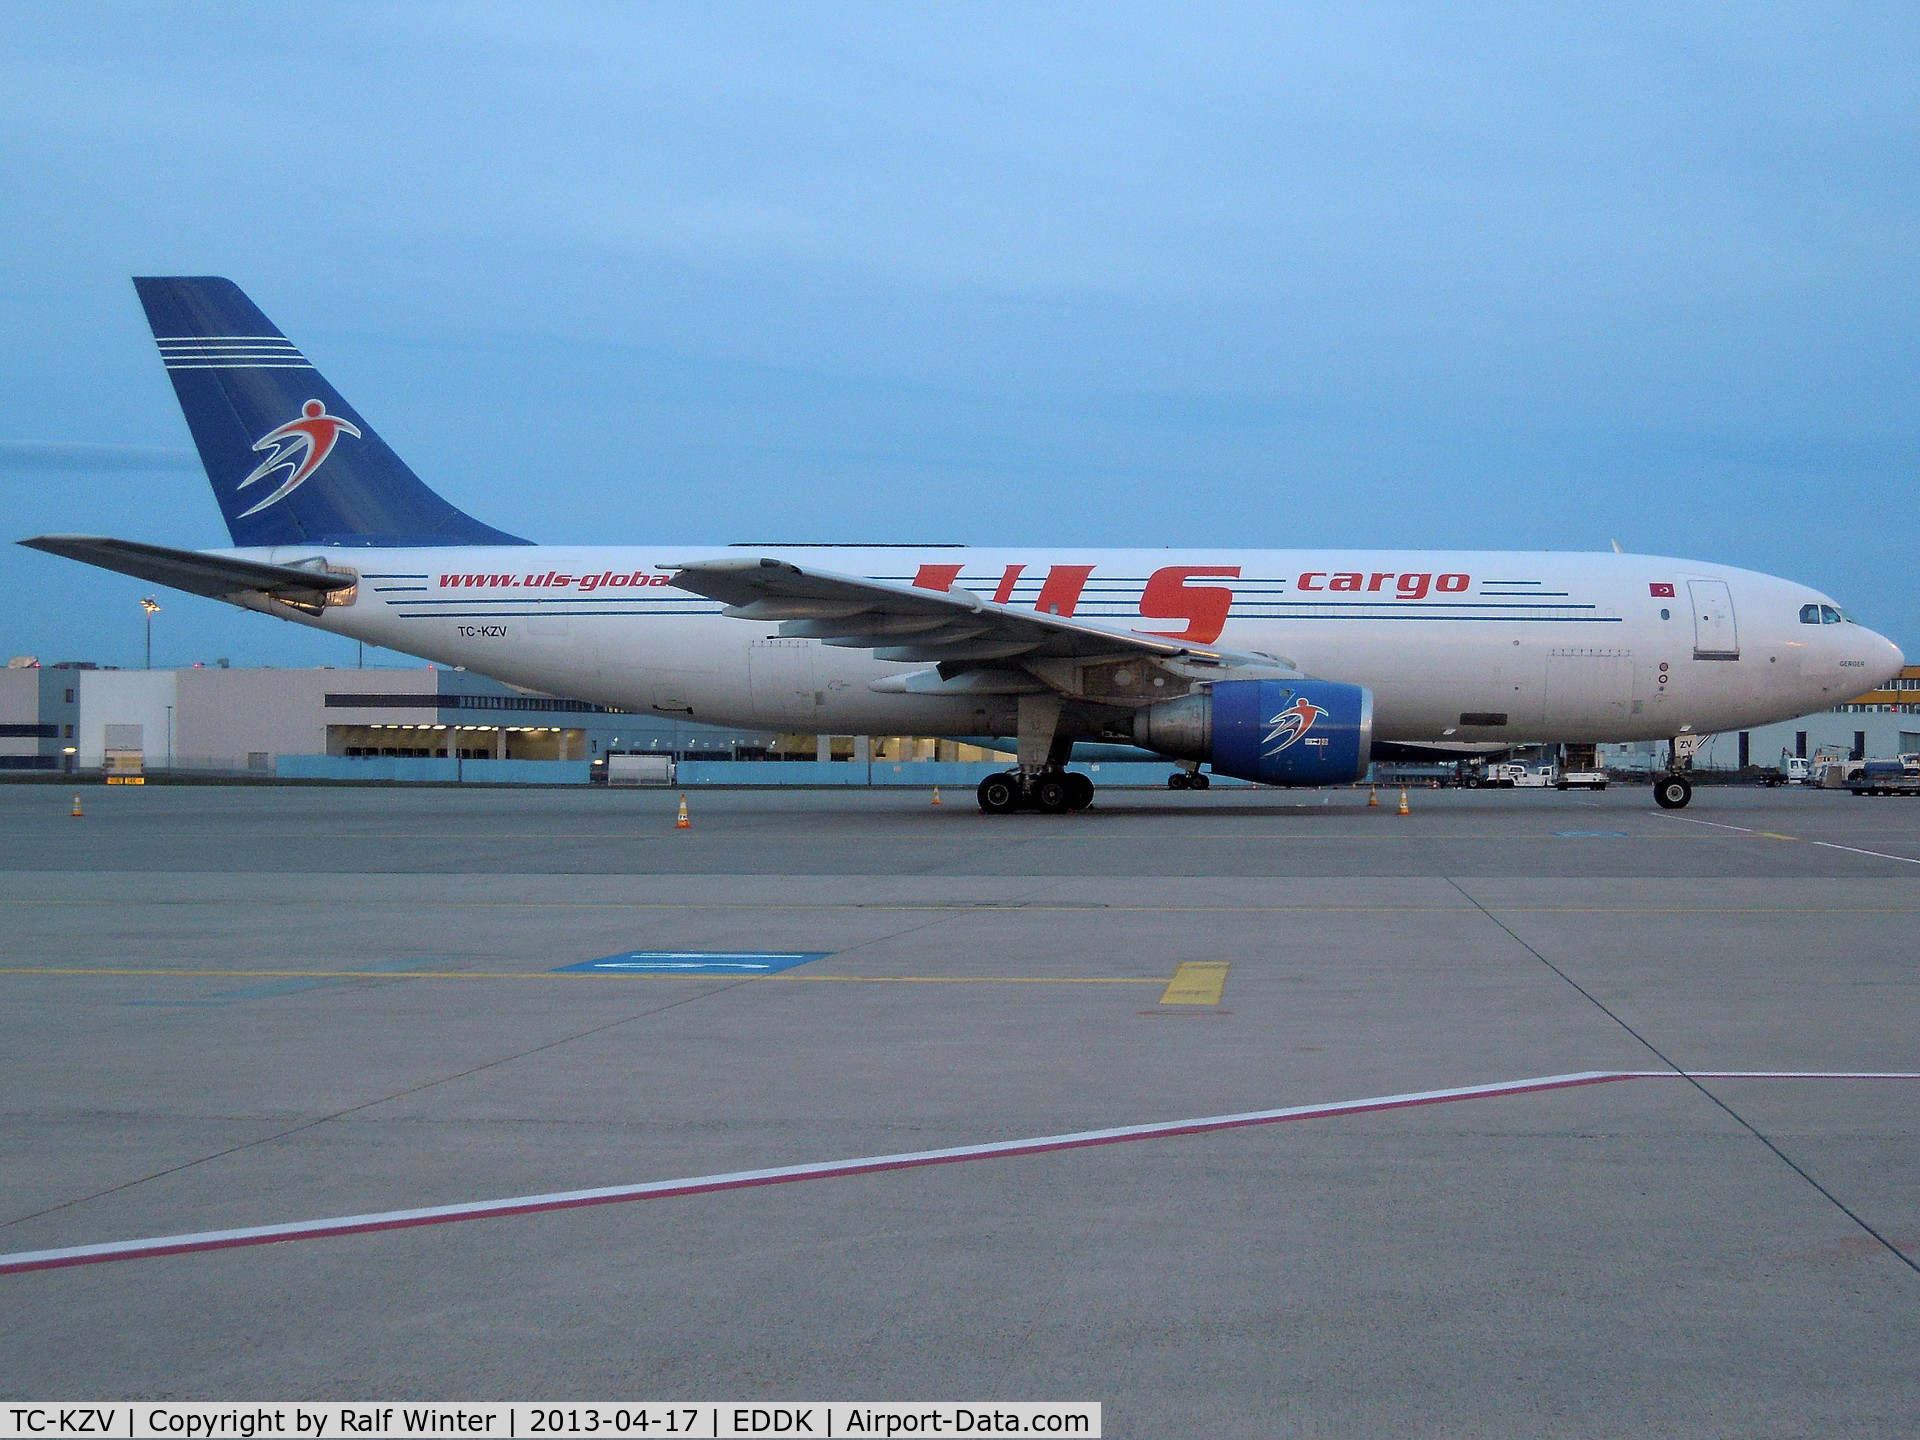 TC-KZV, 1977 Airbus A300B4-2C C/N 041, Airbus A300 B4-2C-103F - ULS Airline Cargo - TC-KZV - 04.2013 - CGN